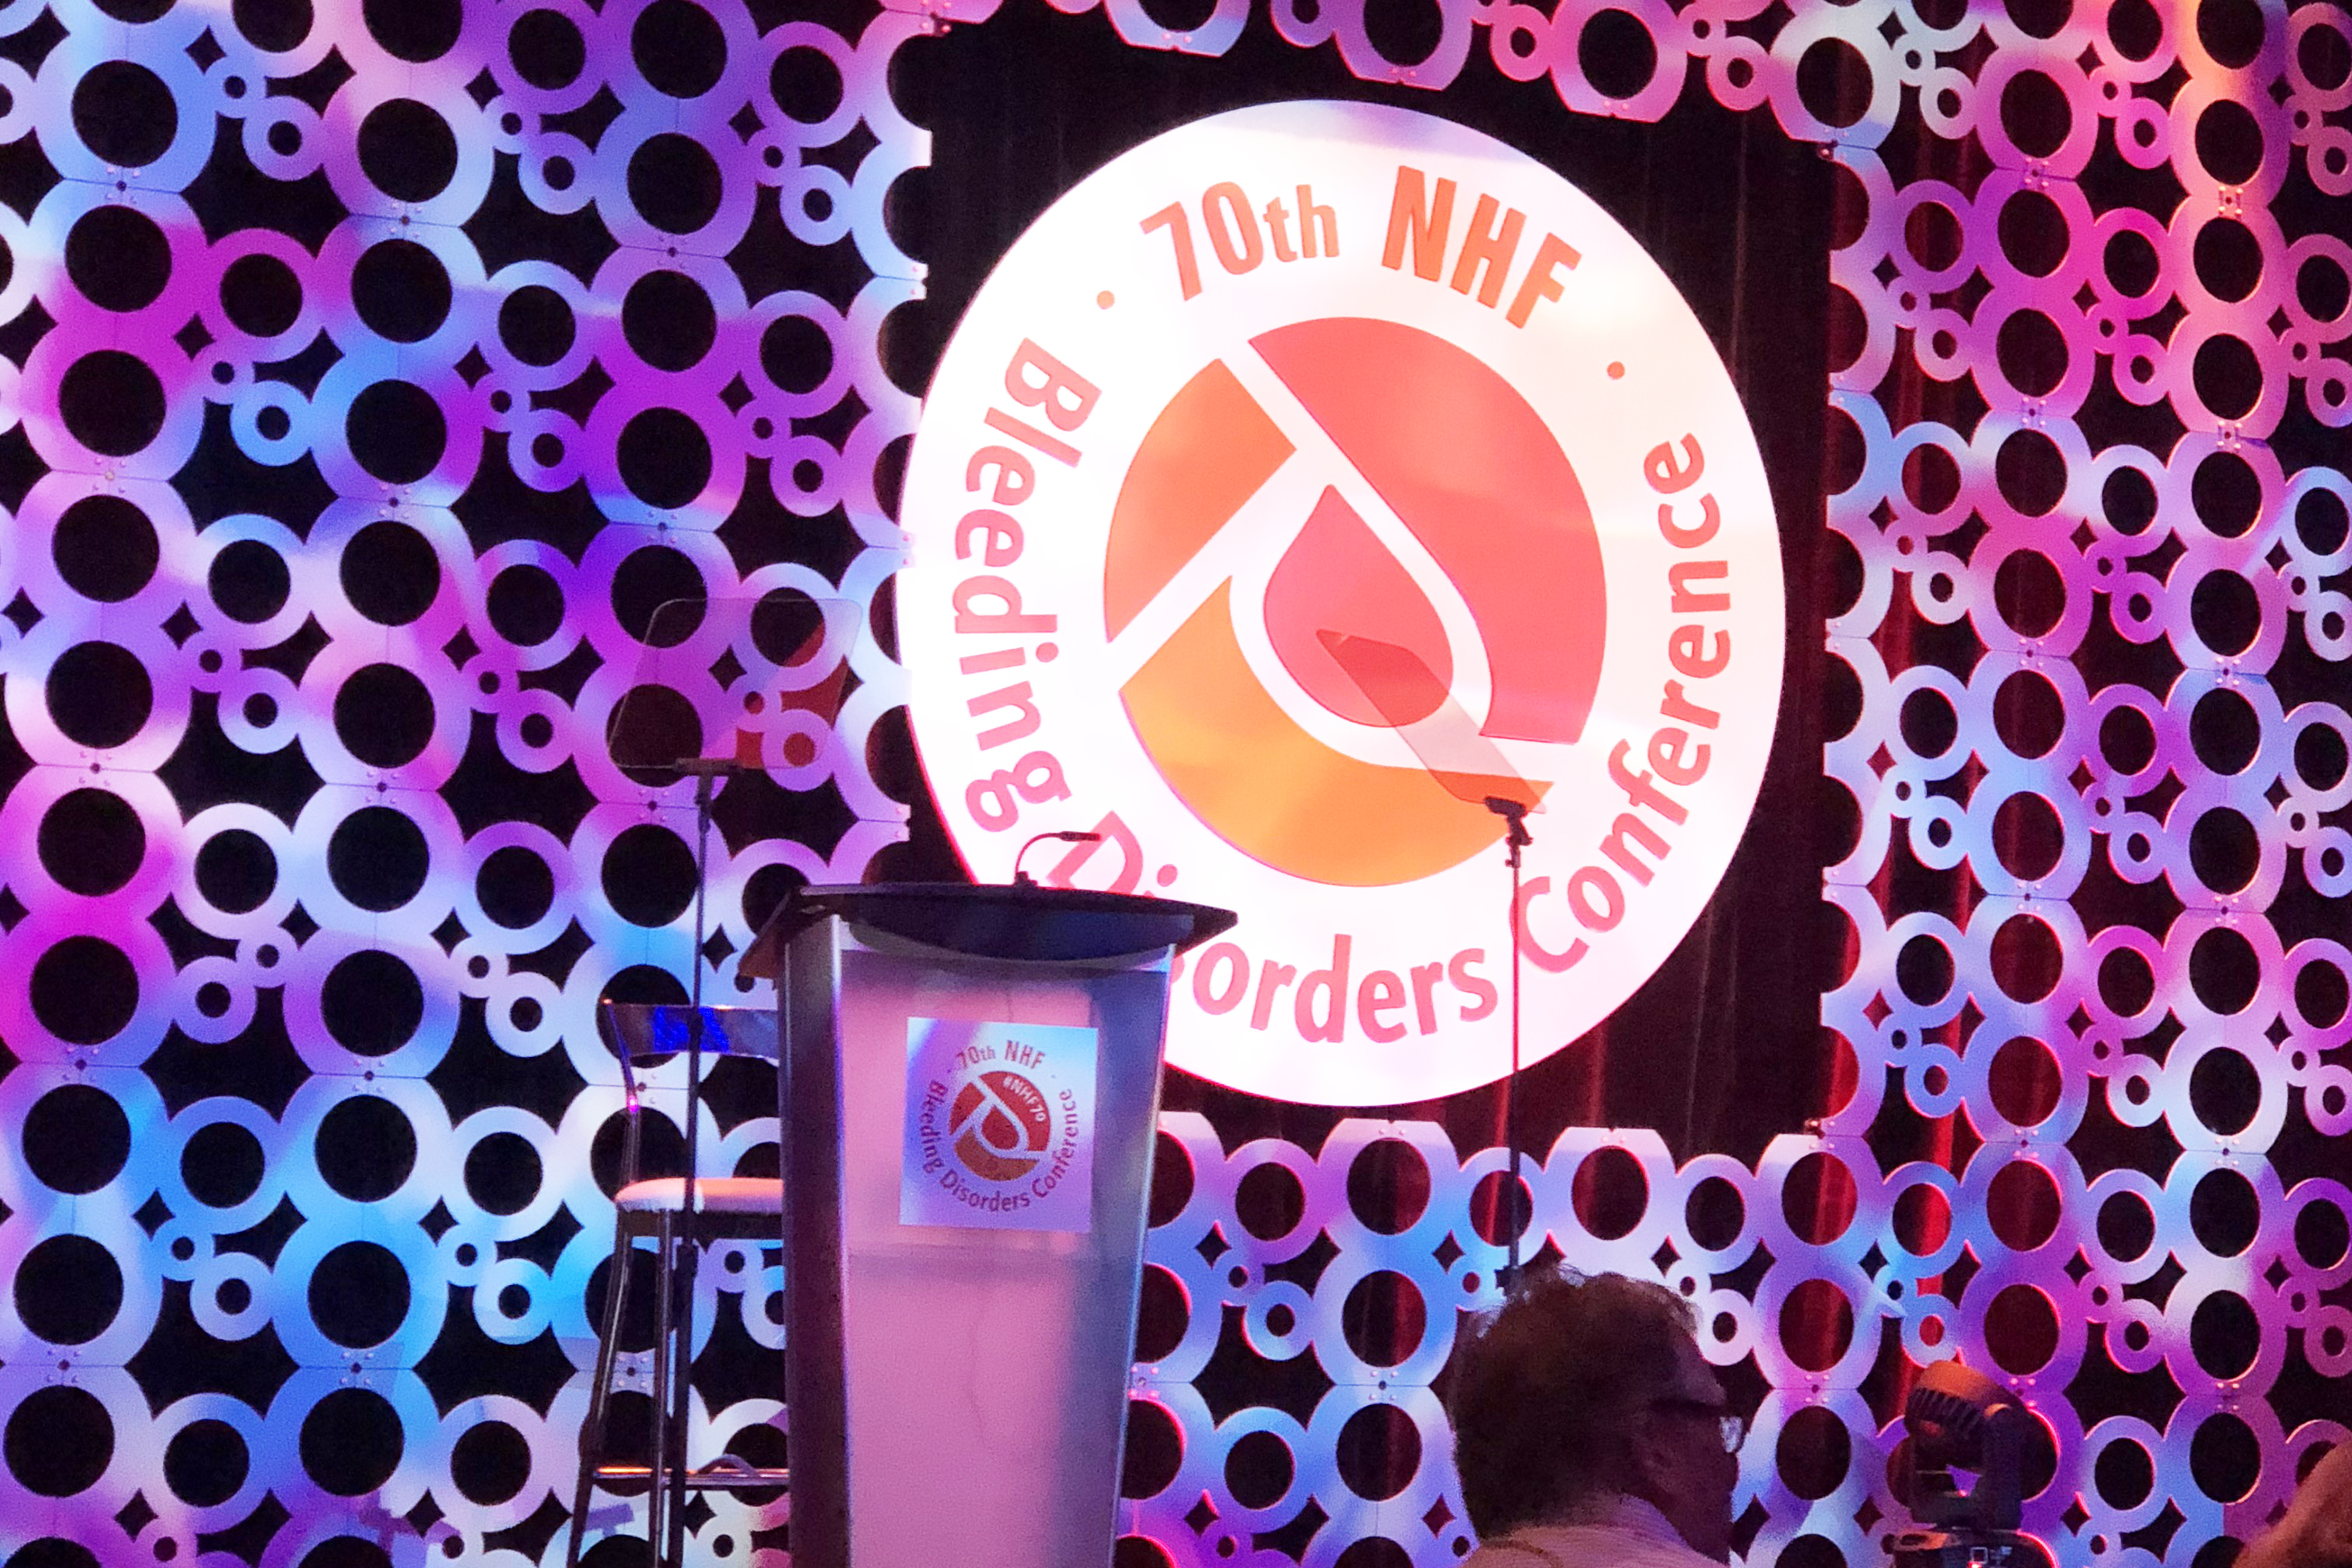 2018 National Hemophilia Foundation Conference in Orlando Logo and Podium